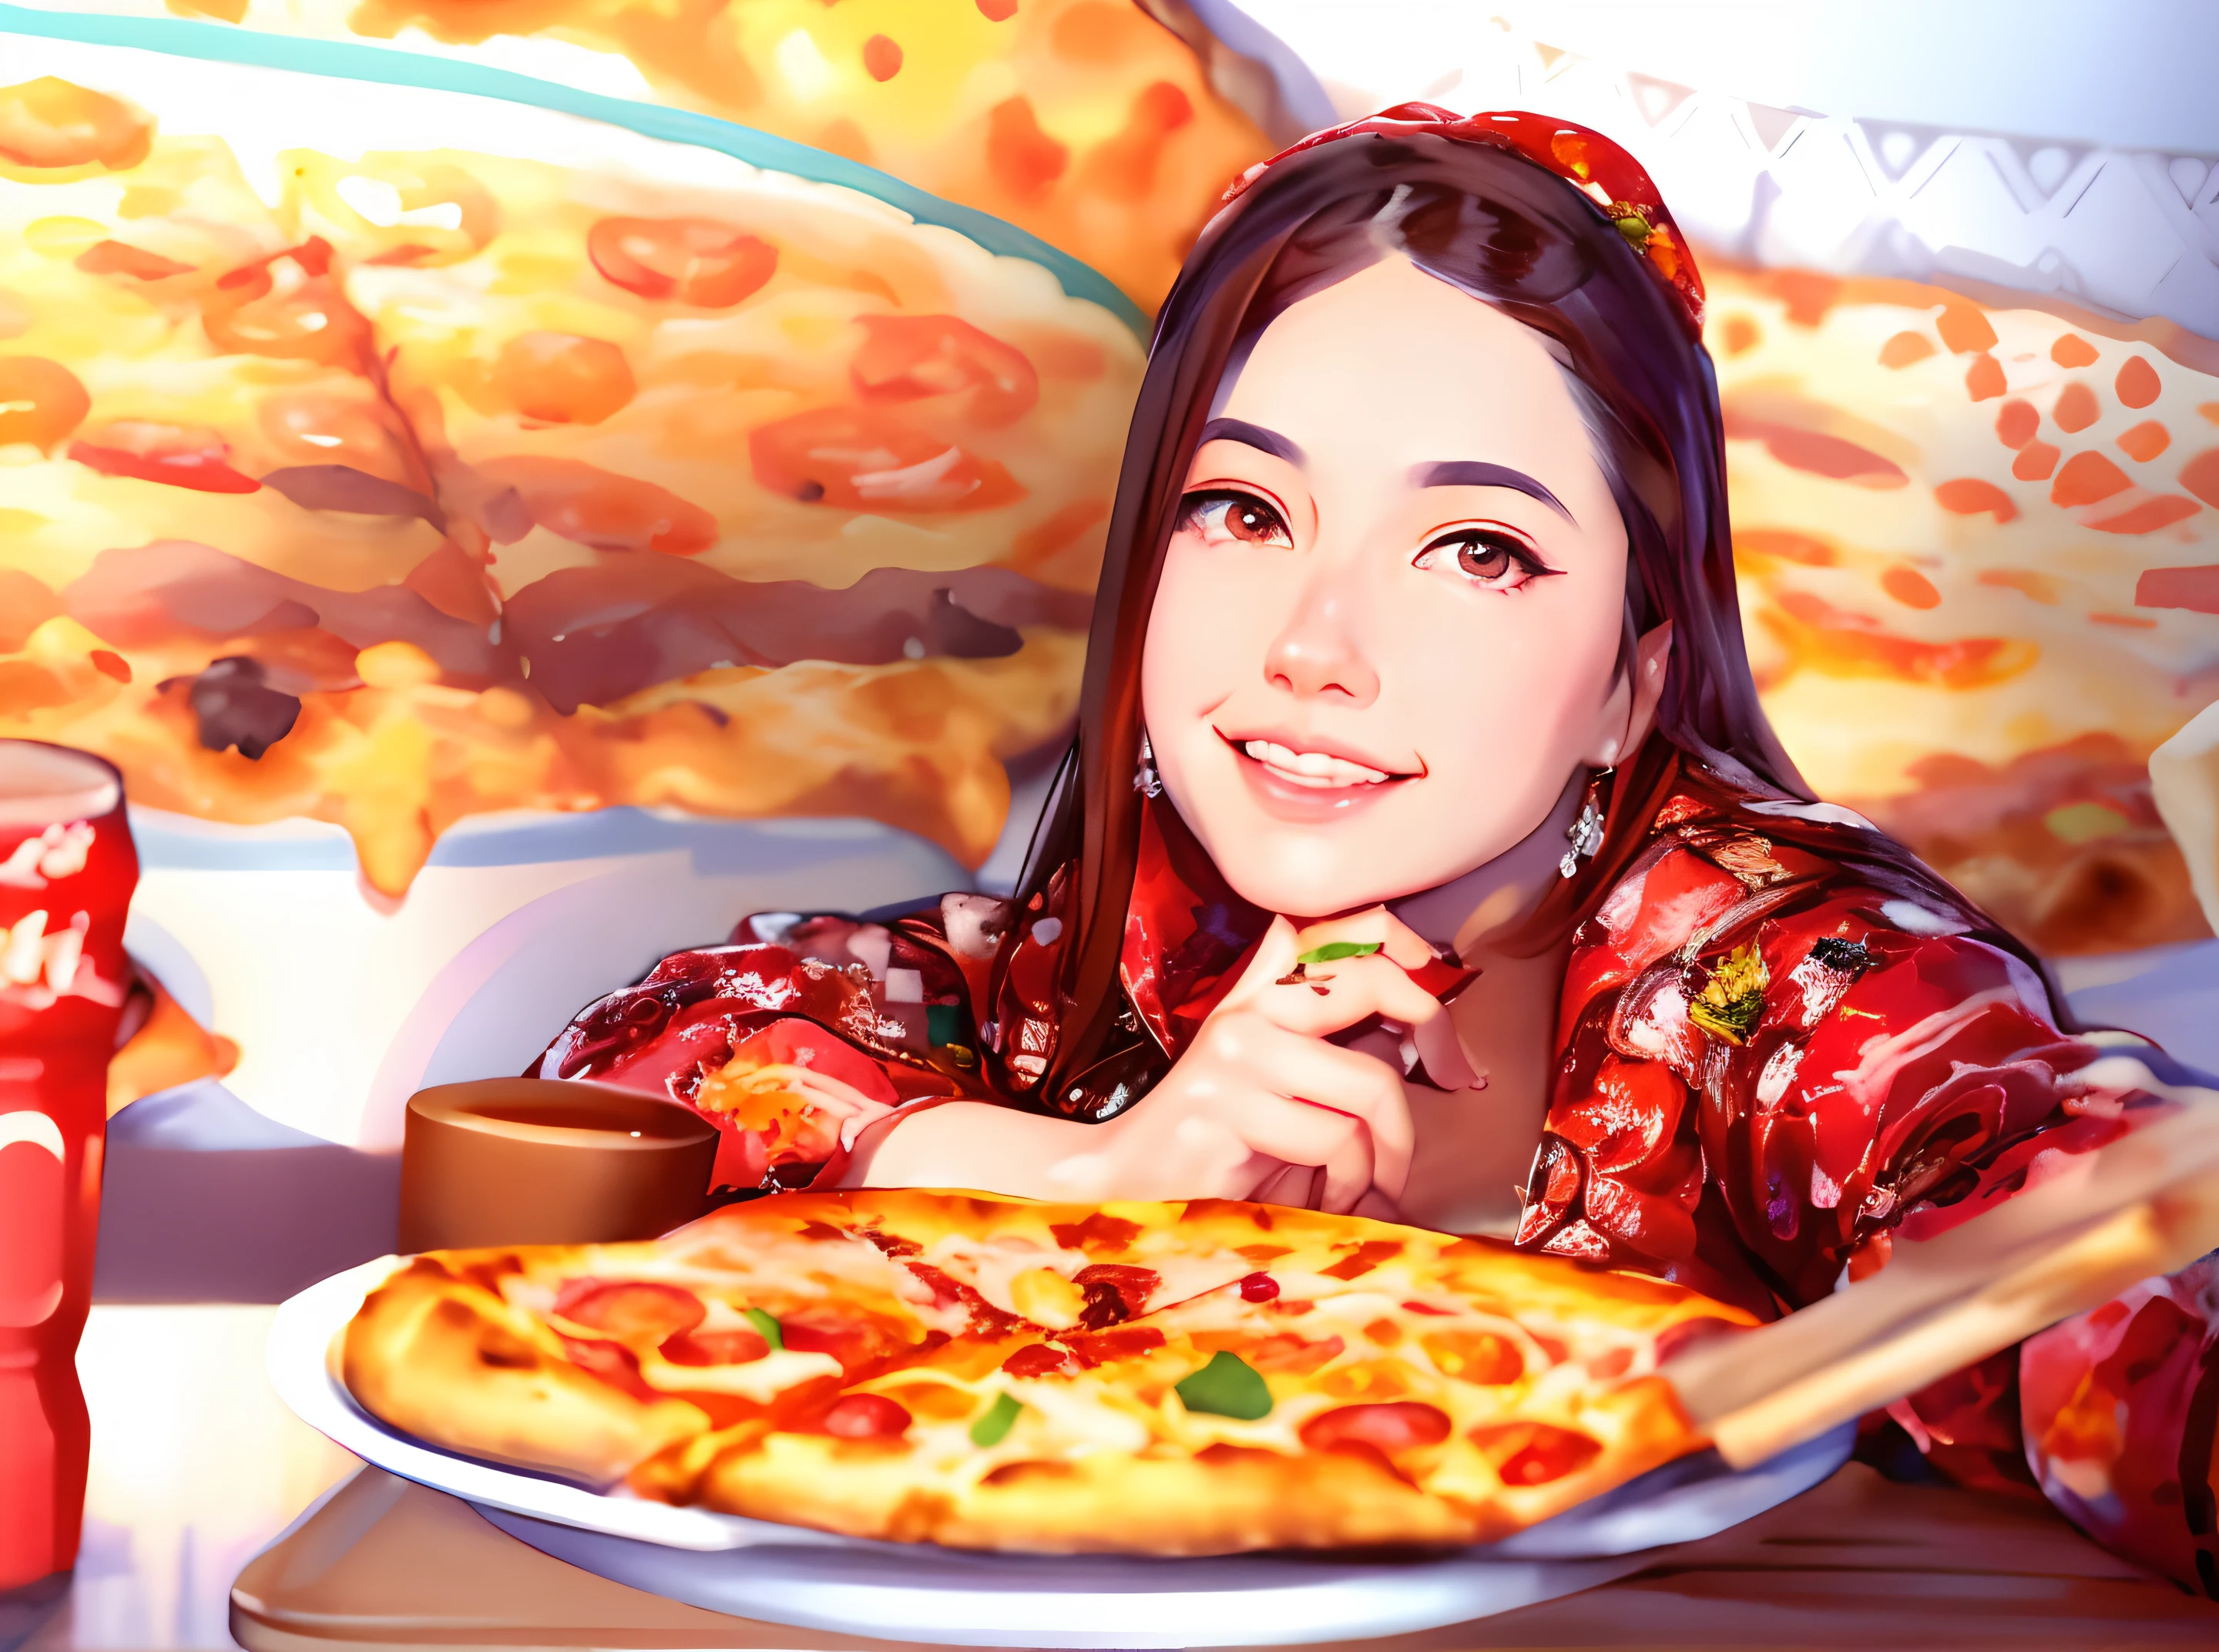 there is a woman sitting at a table with a пицца, eating пицца, потрясающая иллюстрация еды, eating a пицца, цифровая живопись мультфильм, реалистичный стиль, holding пицца, пицца, цифровая мультяшная живопись, пицца!, Цифровая аниме-иллюстрация, Алиса х. Чжан, реализм, работа в стиле Гувейза, стилизованная цифровая иллюстрация, изысканная цифровая иллюстрация